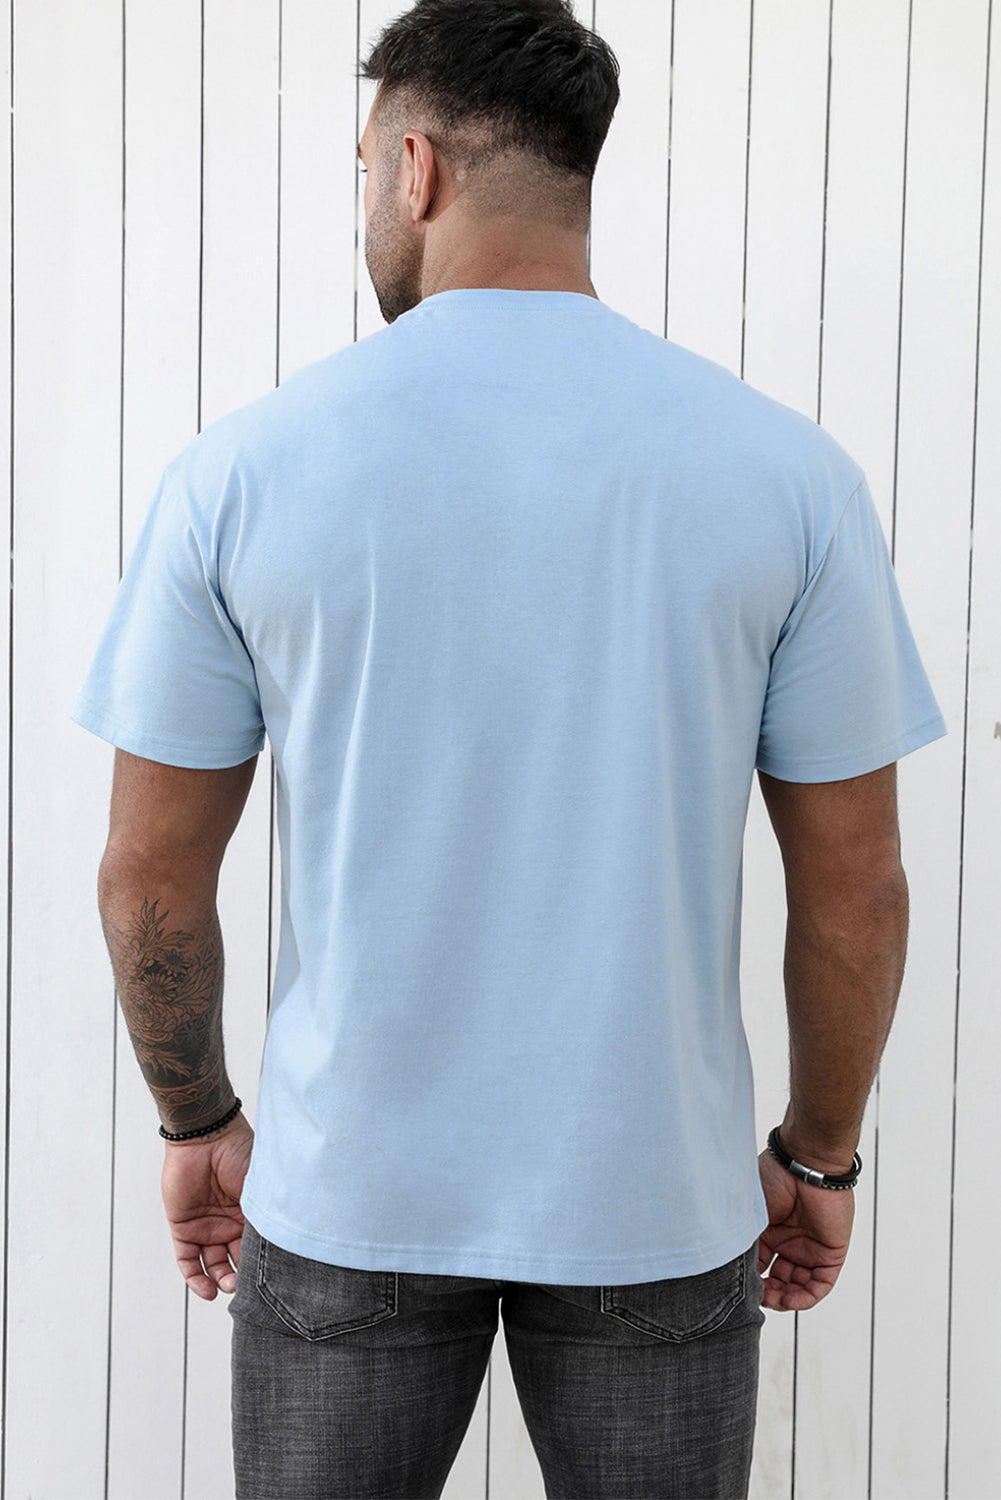 Sky Blue Men's Father's Day Letter Print Short Sleeve Graphic T Shirt Men's Tops JT's Designer Fashion